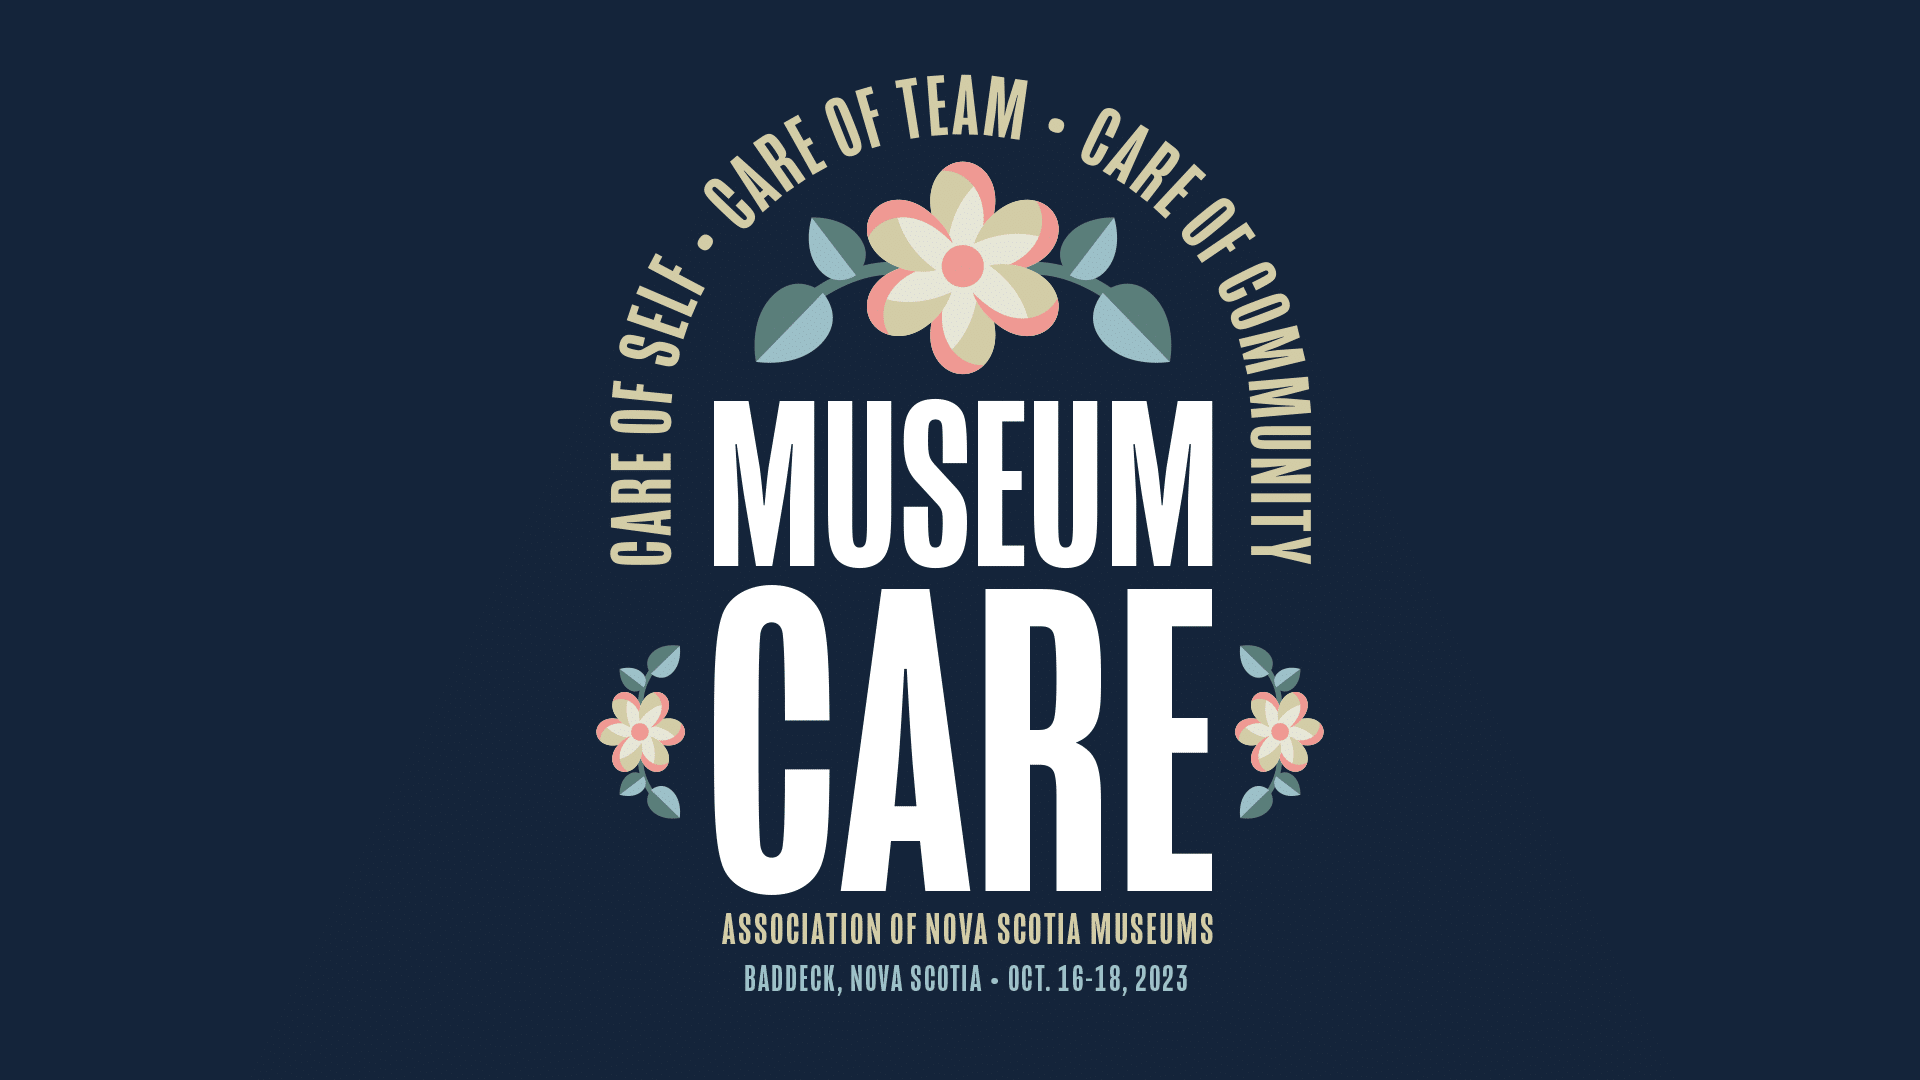 Museum Care: Care of Self, Care of Team, Care of Community. Association of Nova Scotia Museum Annual Conference 2023 in Baddeck, Cape Breton, Nova Scotia.